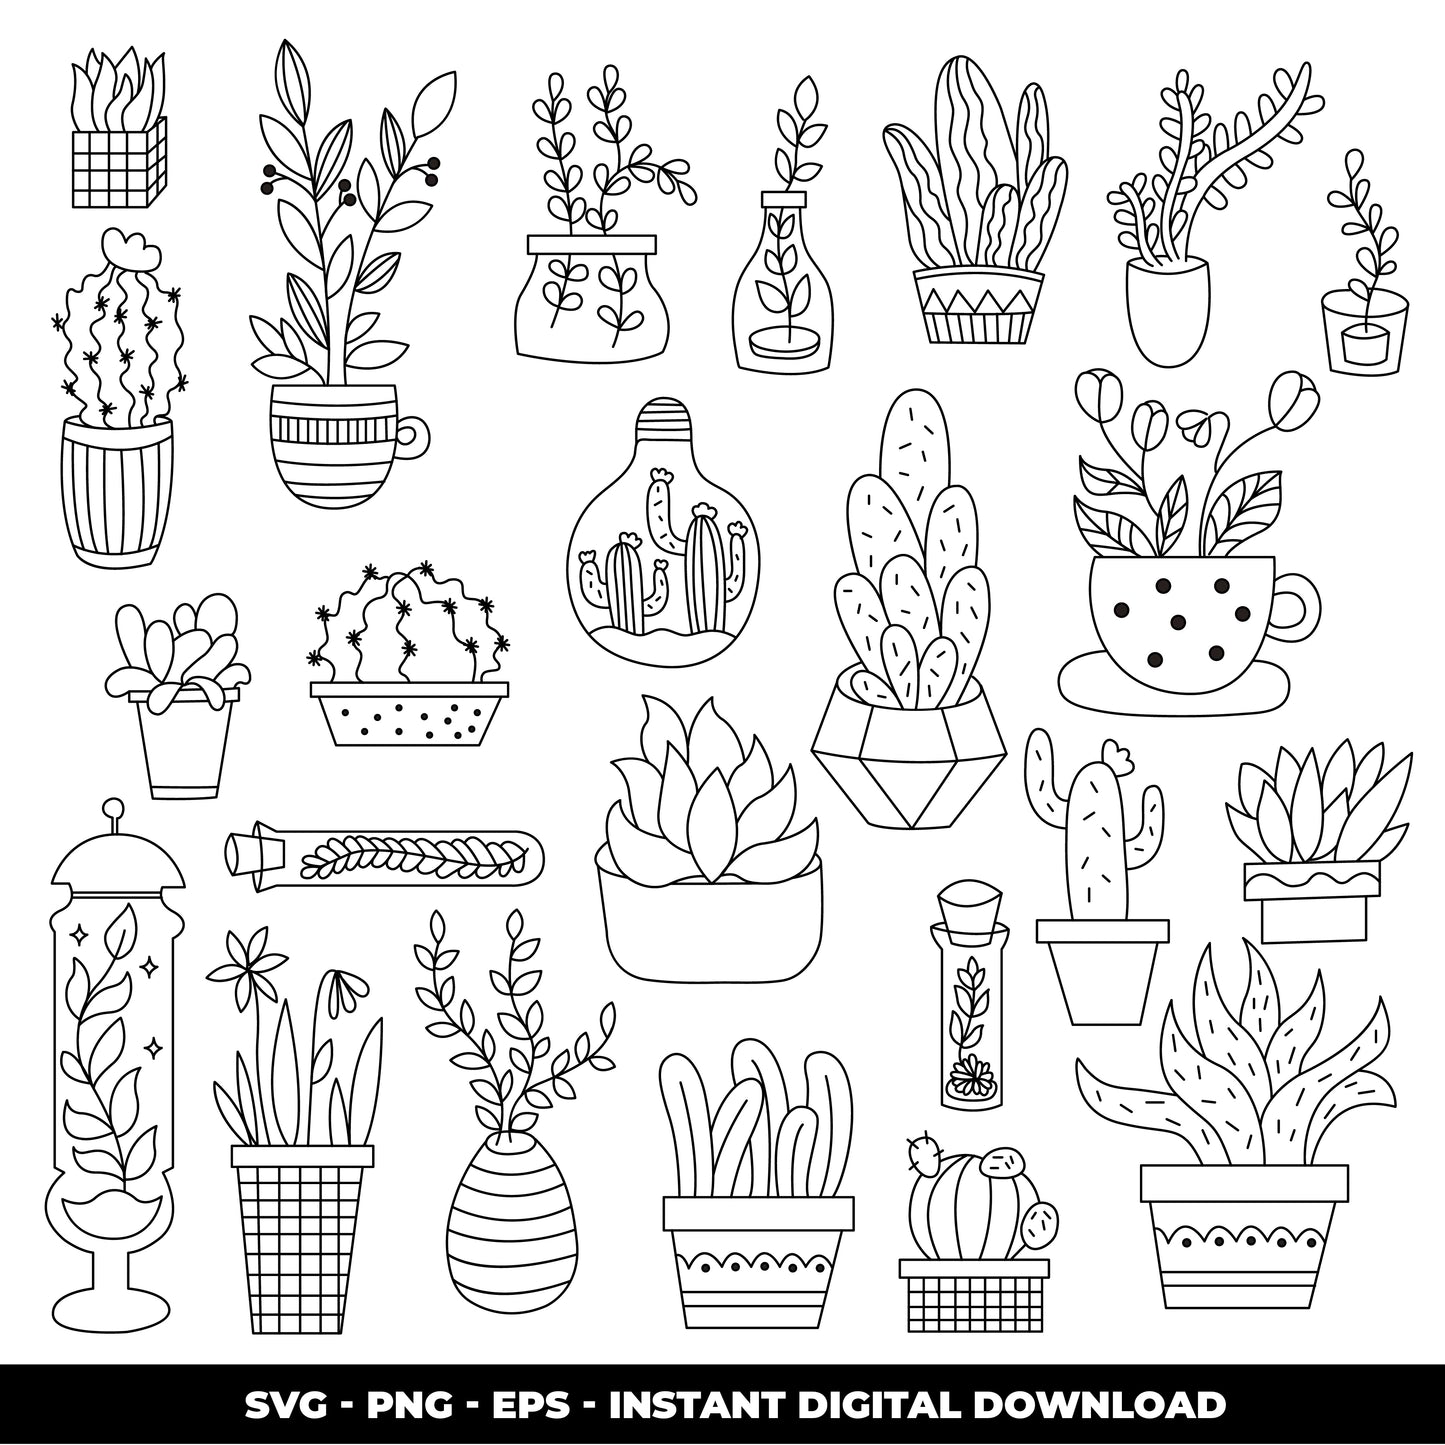 COD873  Cactus cliparts, Succulent SVG, CACTUS SVG, House Plants Clipart, Terrarium Cactus Art, Cactus Doodles Clipart, Digital Stamp